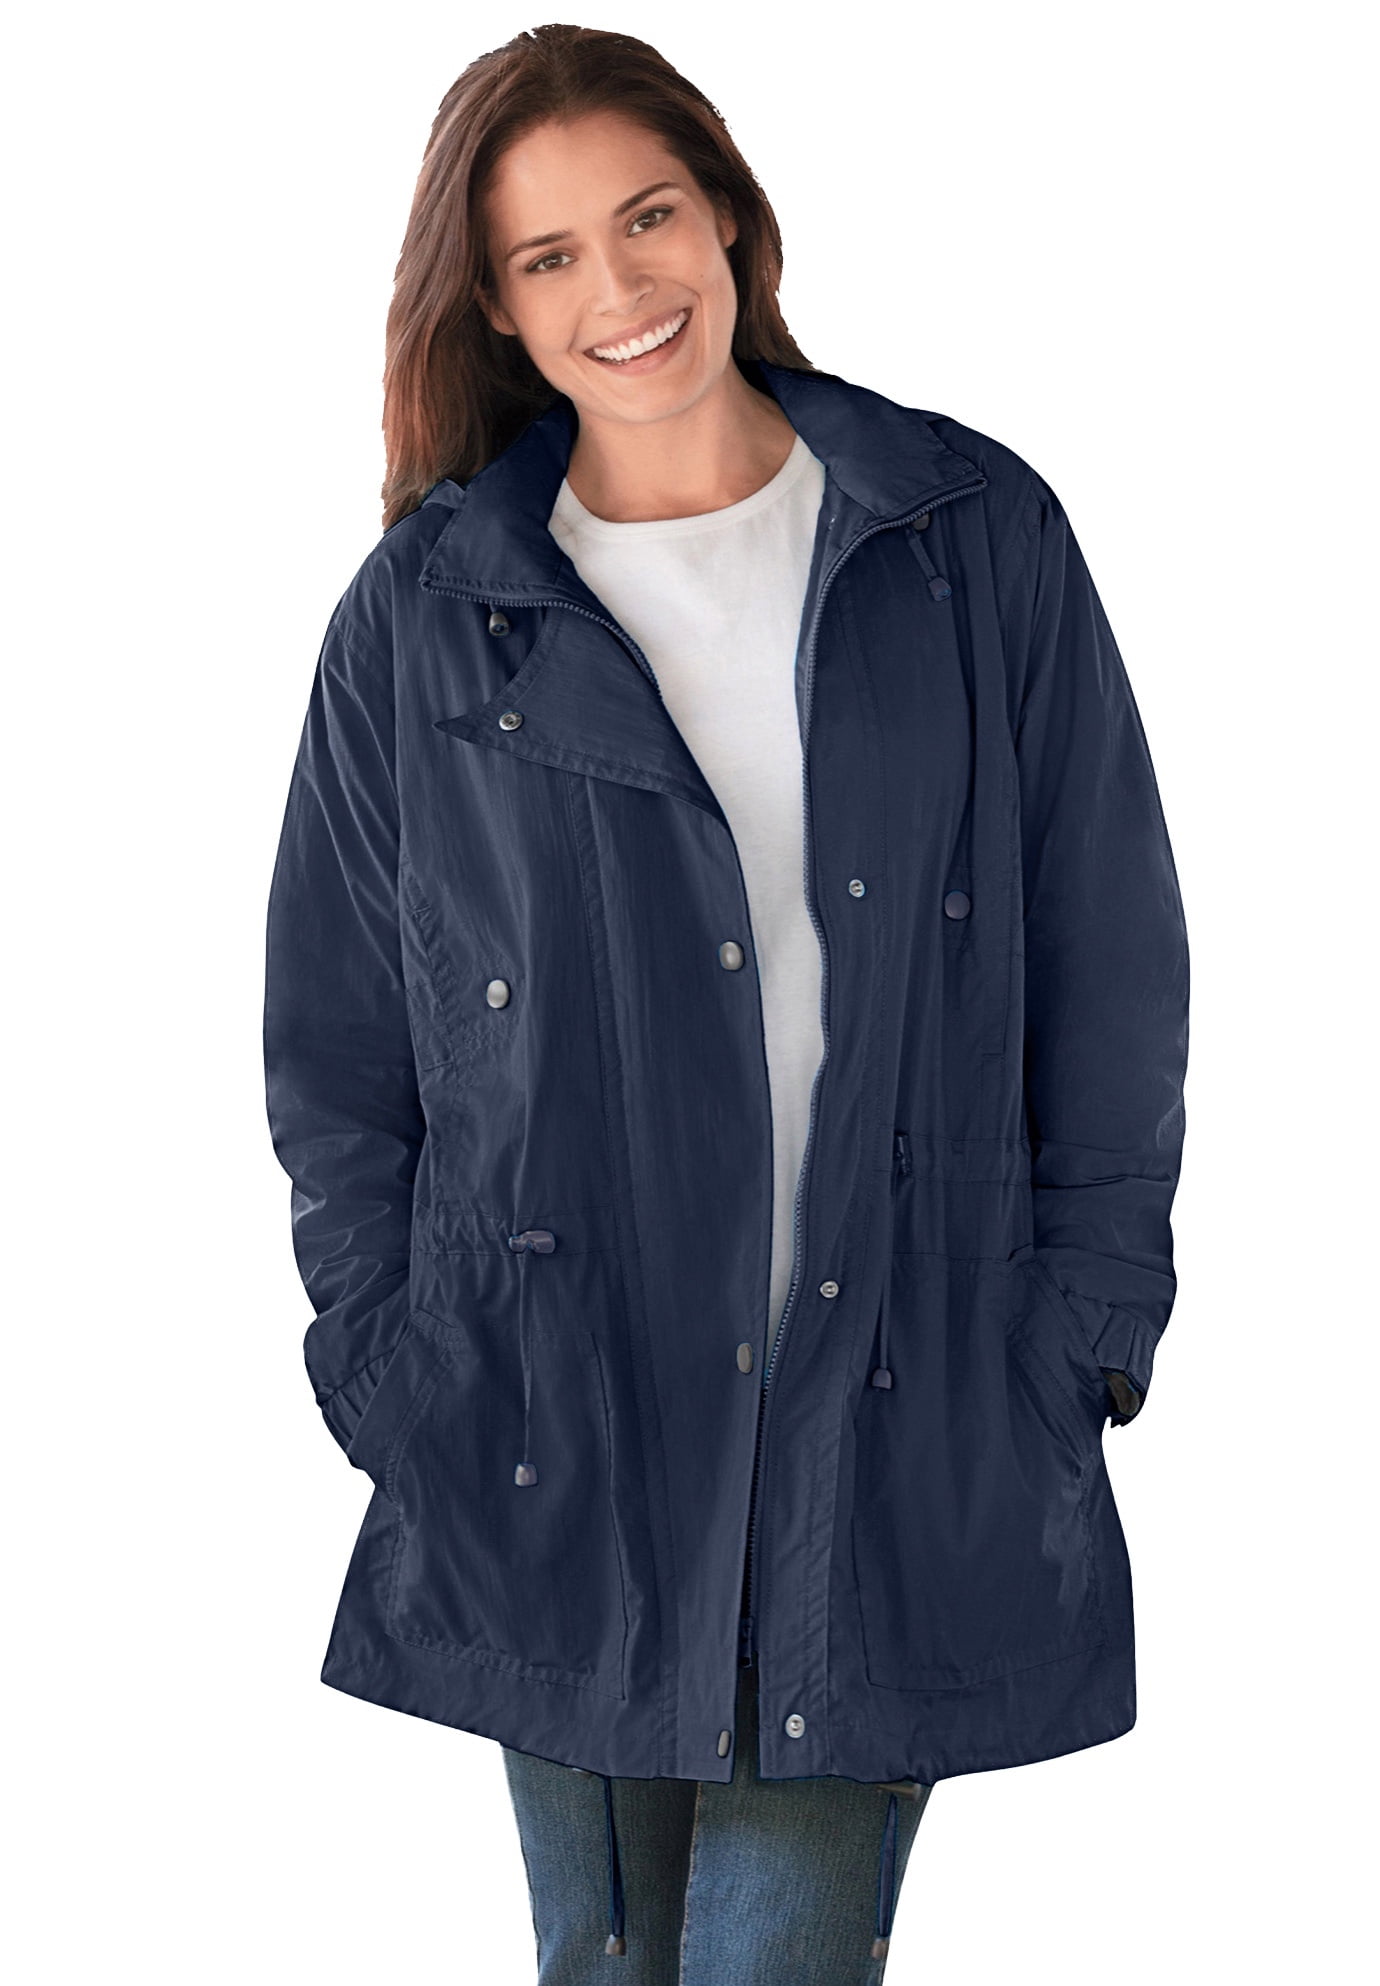 Ontbering bereiden Weglaten Woman Within Women's Plus Size Fleece-Lined Taslon Anorak Rain Jacket -  Walmart.com